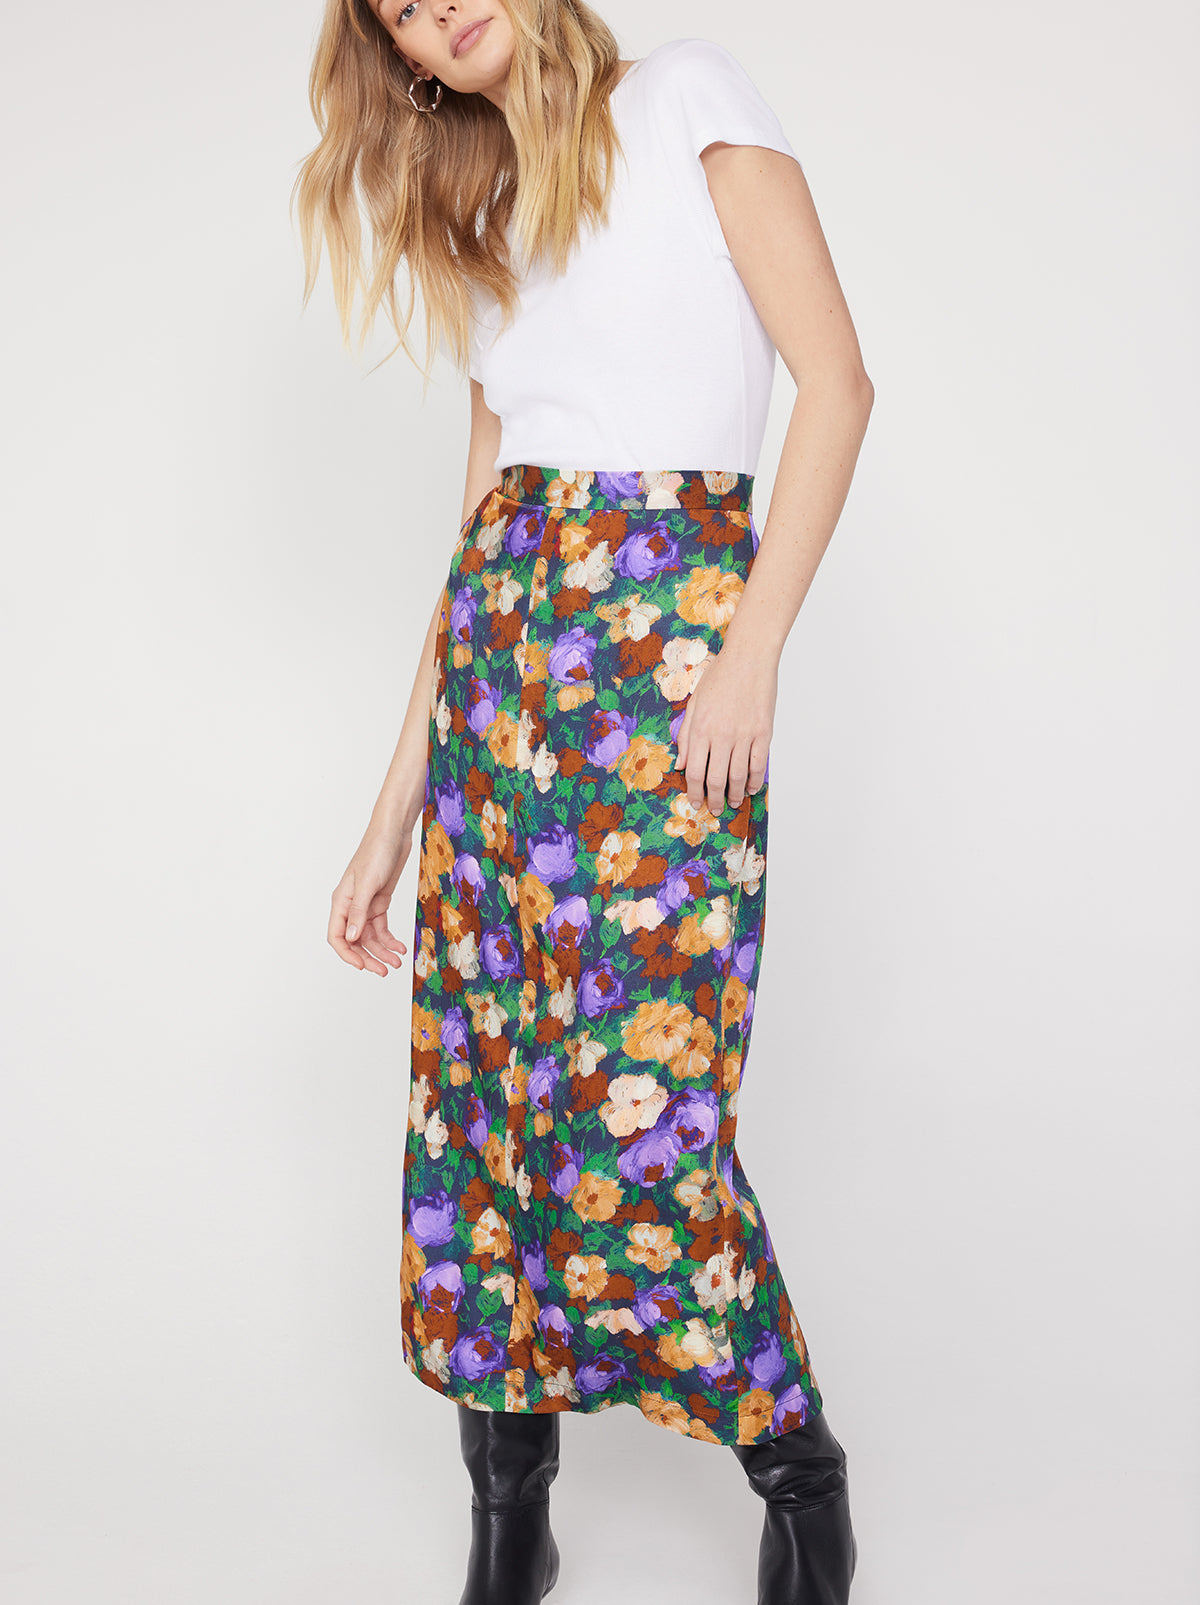 Laurel Iris Impressionist Floral Skirt